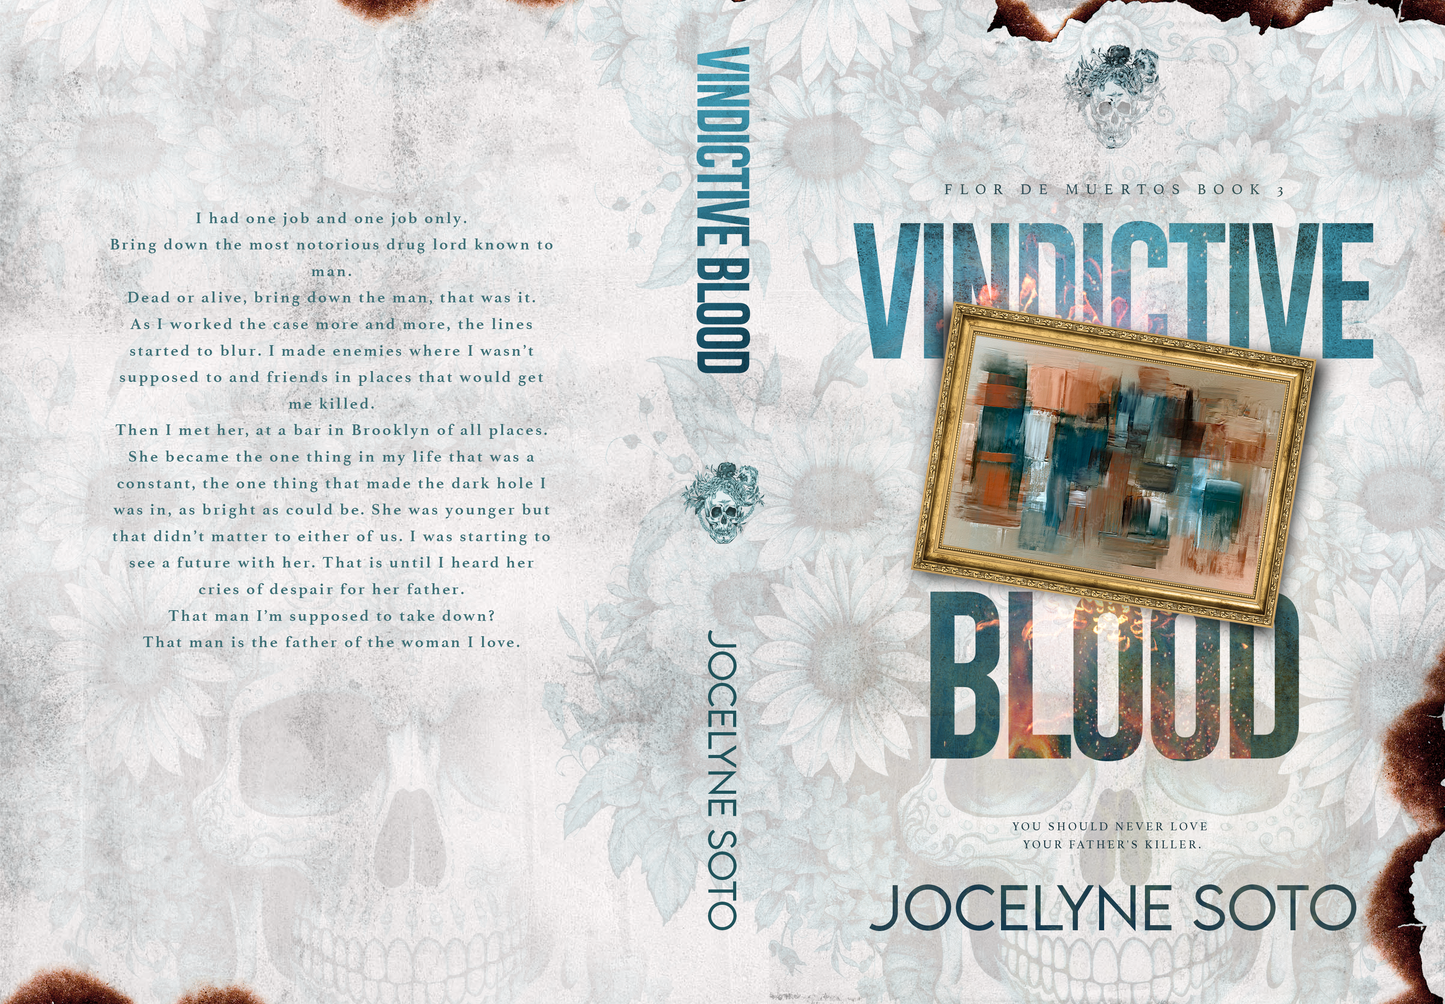 Vindictive Blood: Anniversary Edition